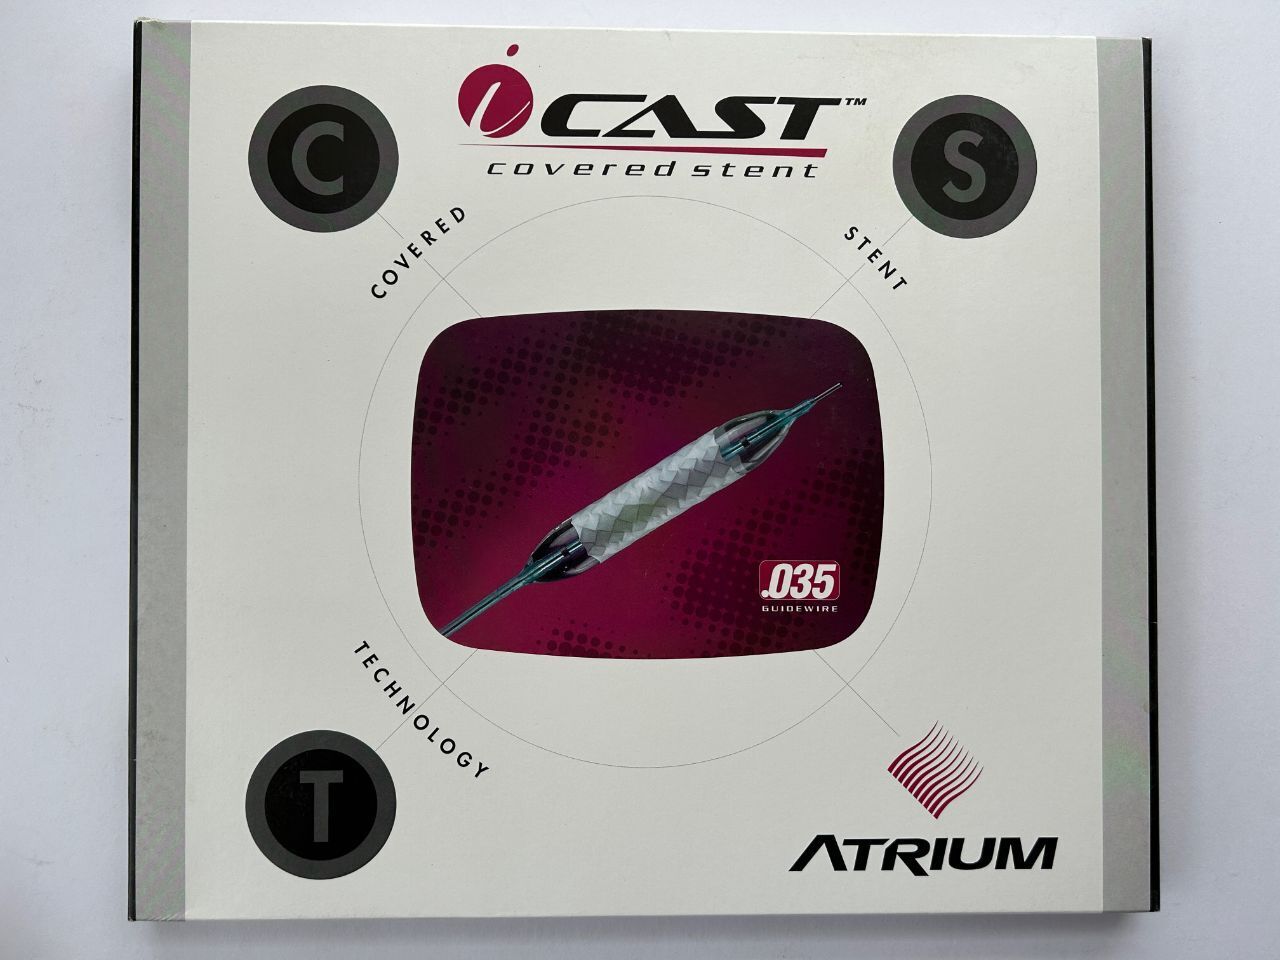 ATRIUM CAST covered stent 8mm x 59mm x 120cm REF: 85417 DATE: 2013/10